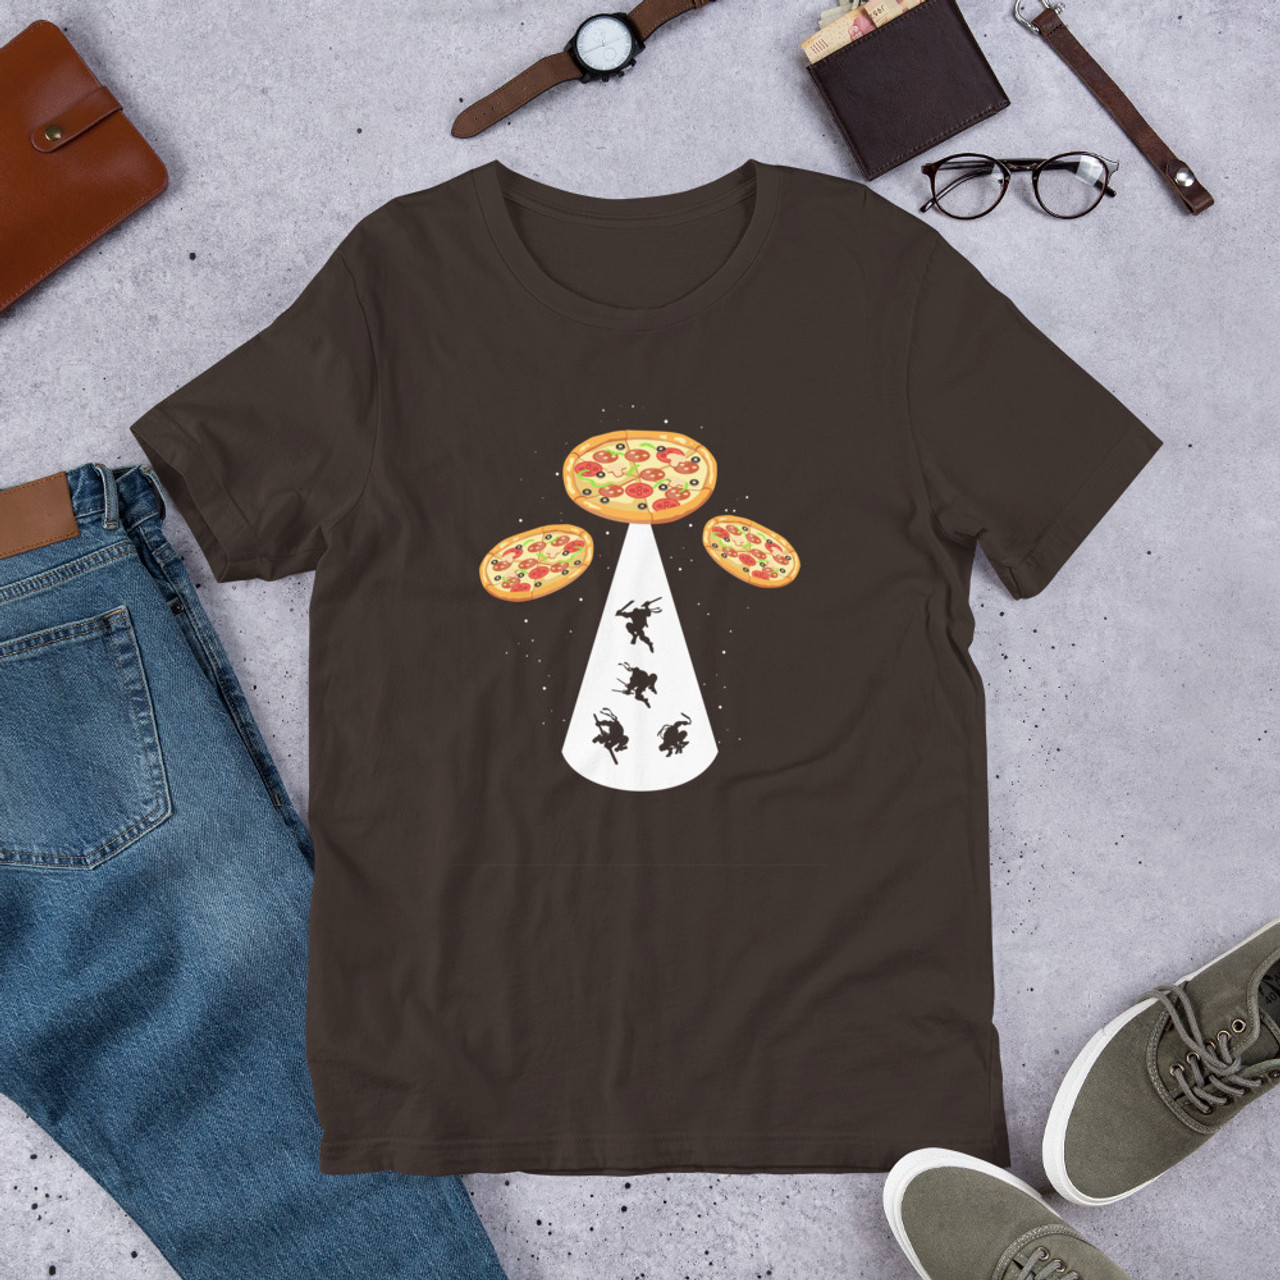 Brown T-Shirt - Bella + Canvas 3001 Pizza UFO